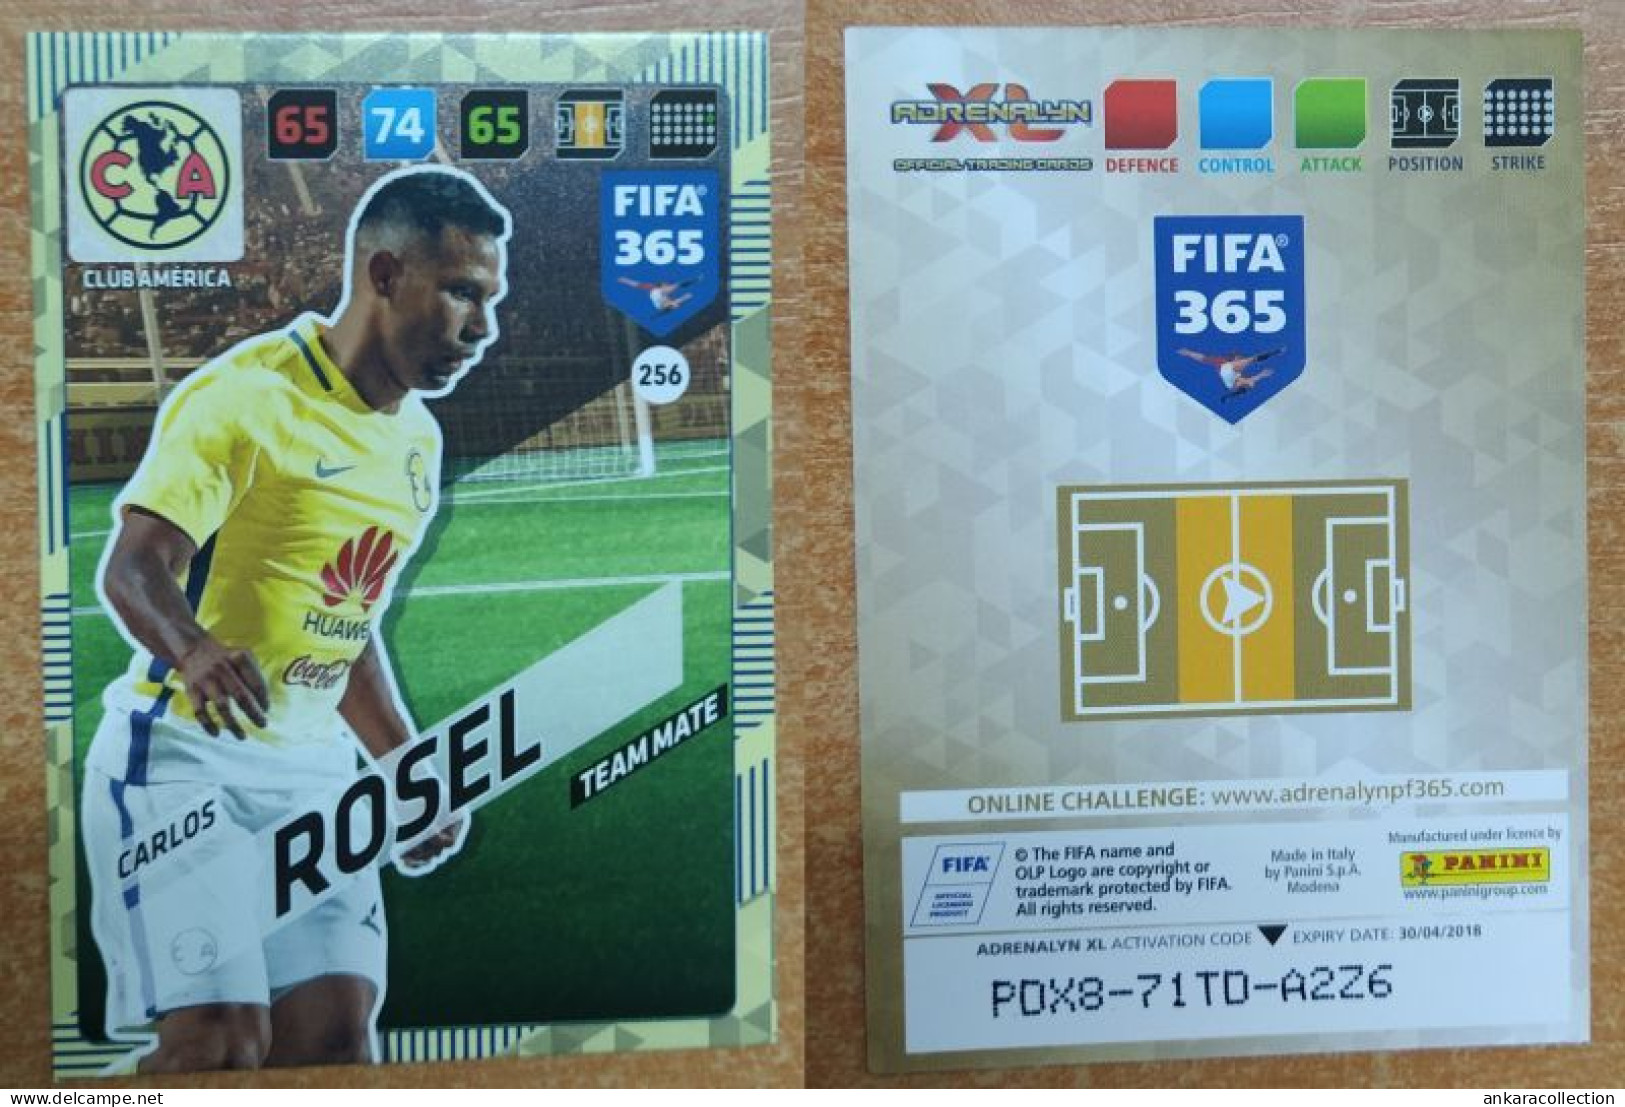 AC - 256 CARLOS ROSEL  CLUB AMERICA  TEAM MATE  FIFA 365 PANINI 2018 ADRENALYN TRADING CARD - Trading Cards